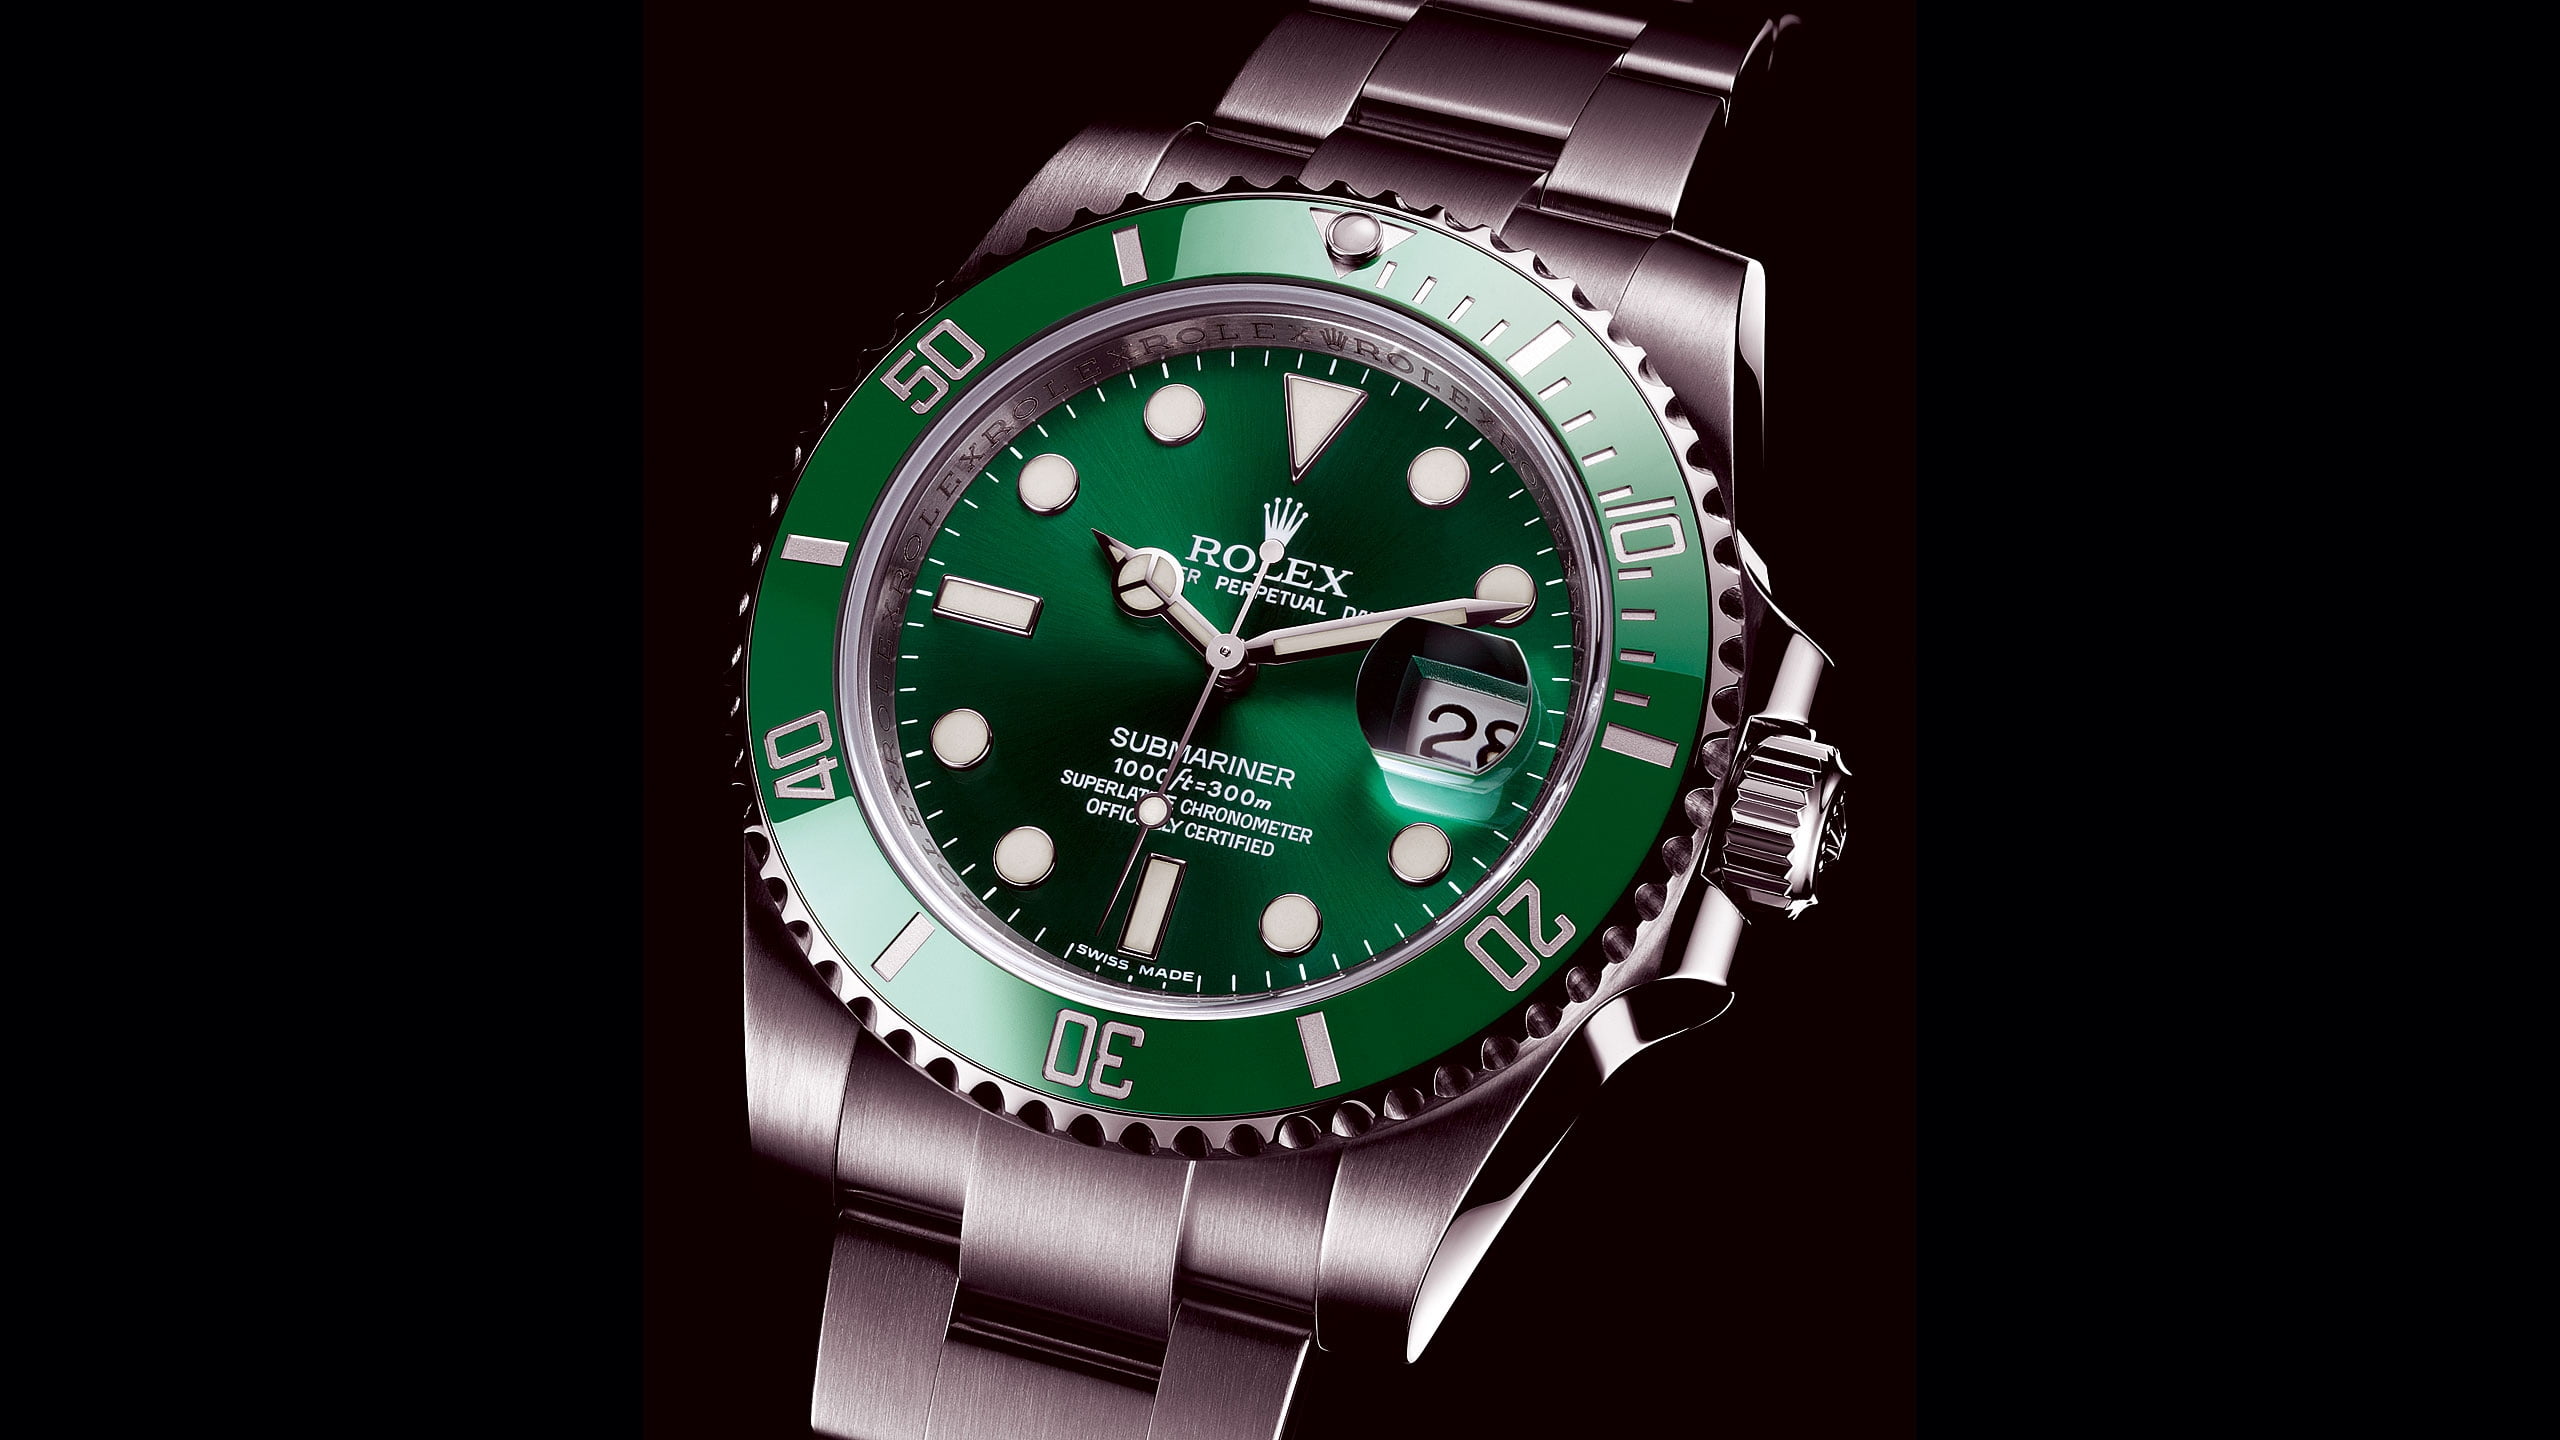 3840x2160 resolution | round green analog Rolex watch with silver link ...